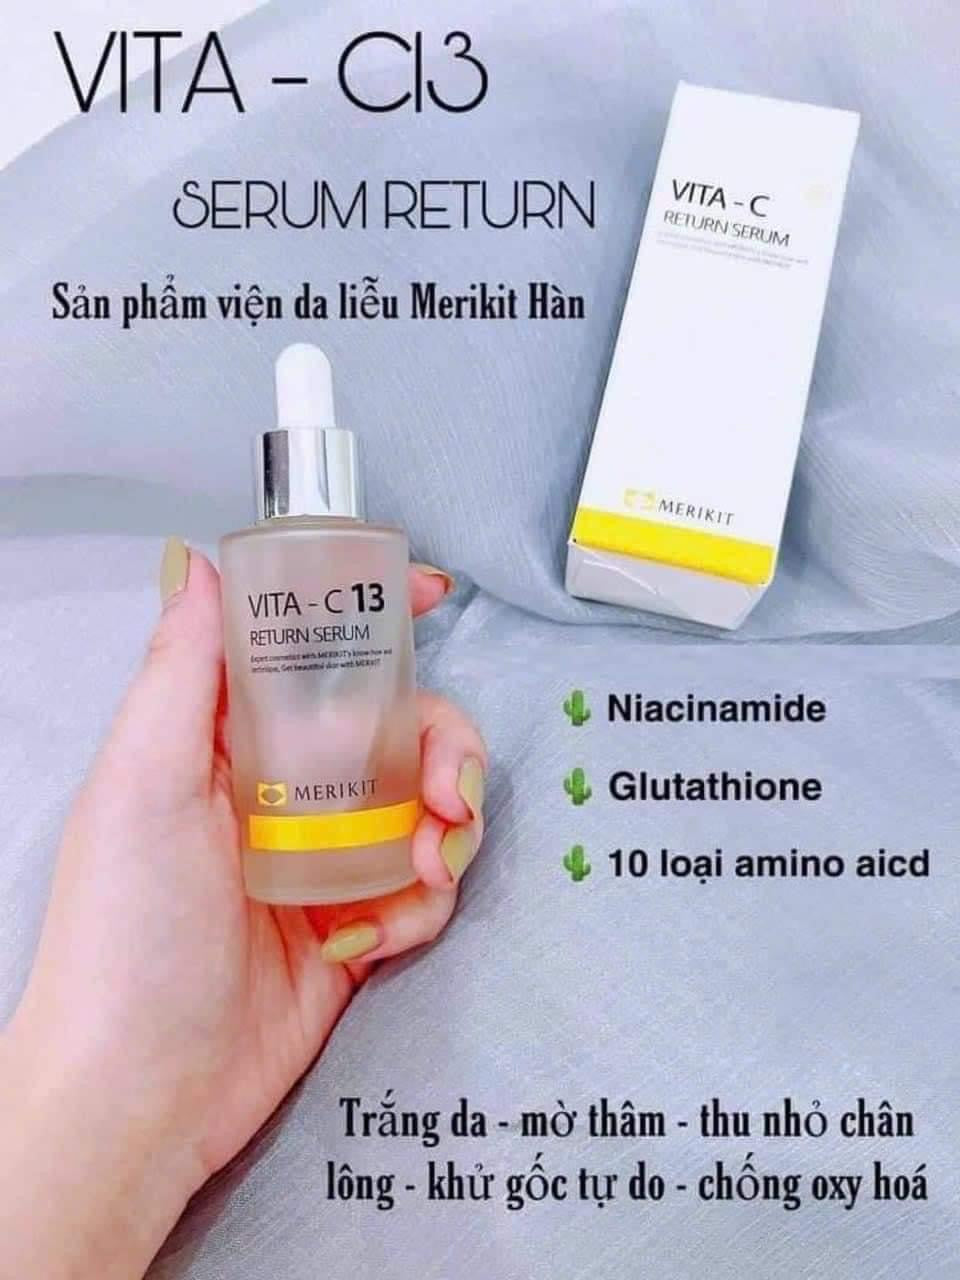 Return serum Vita c13